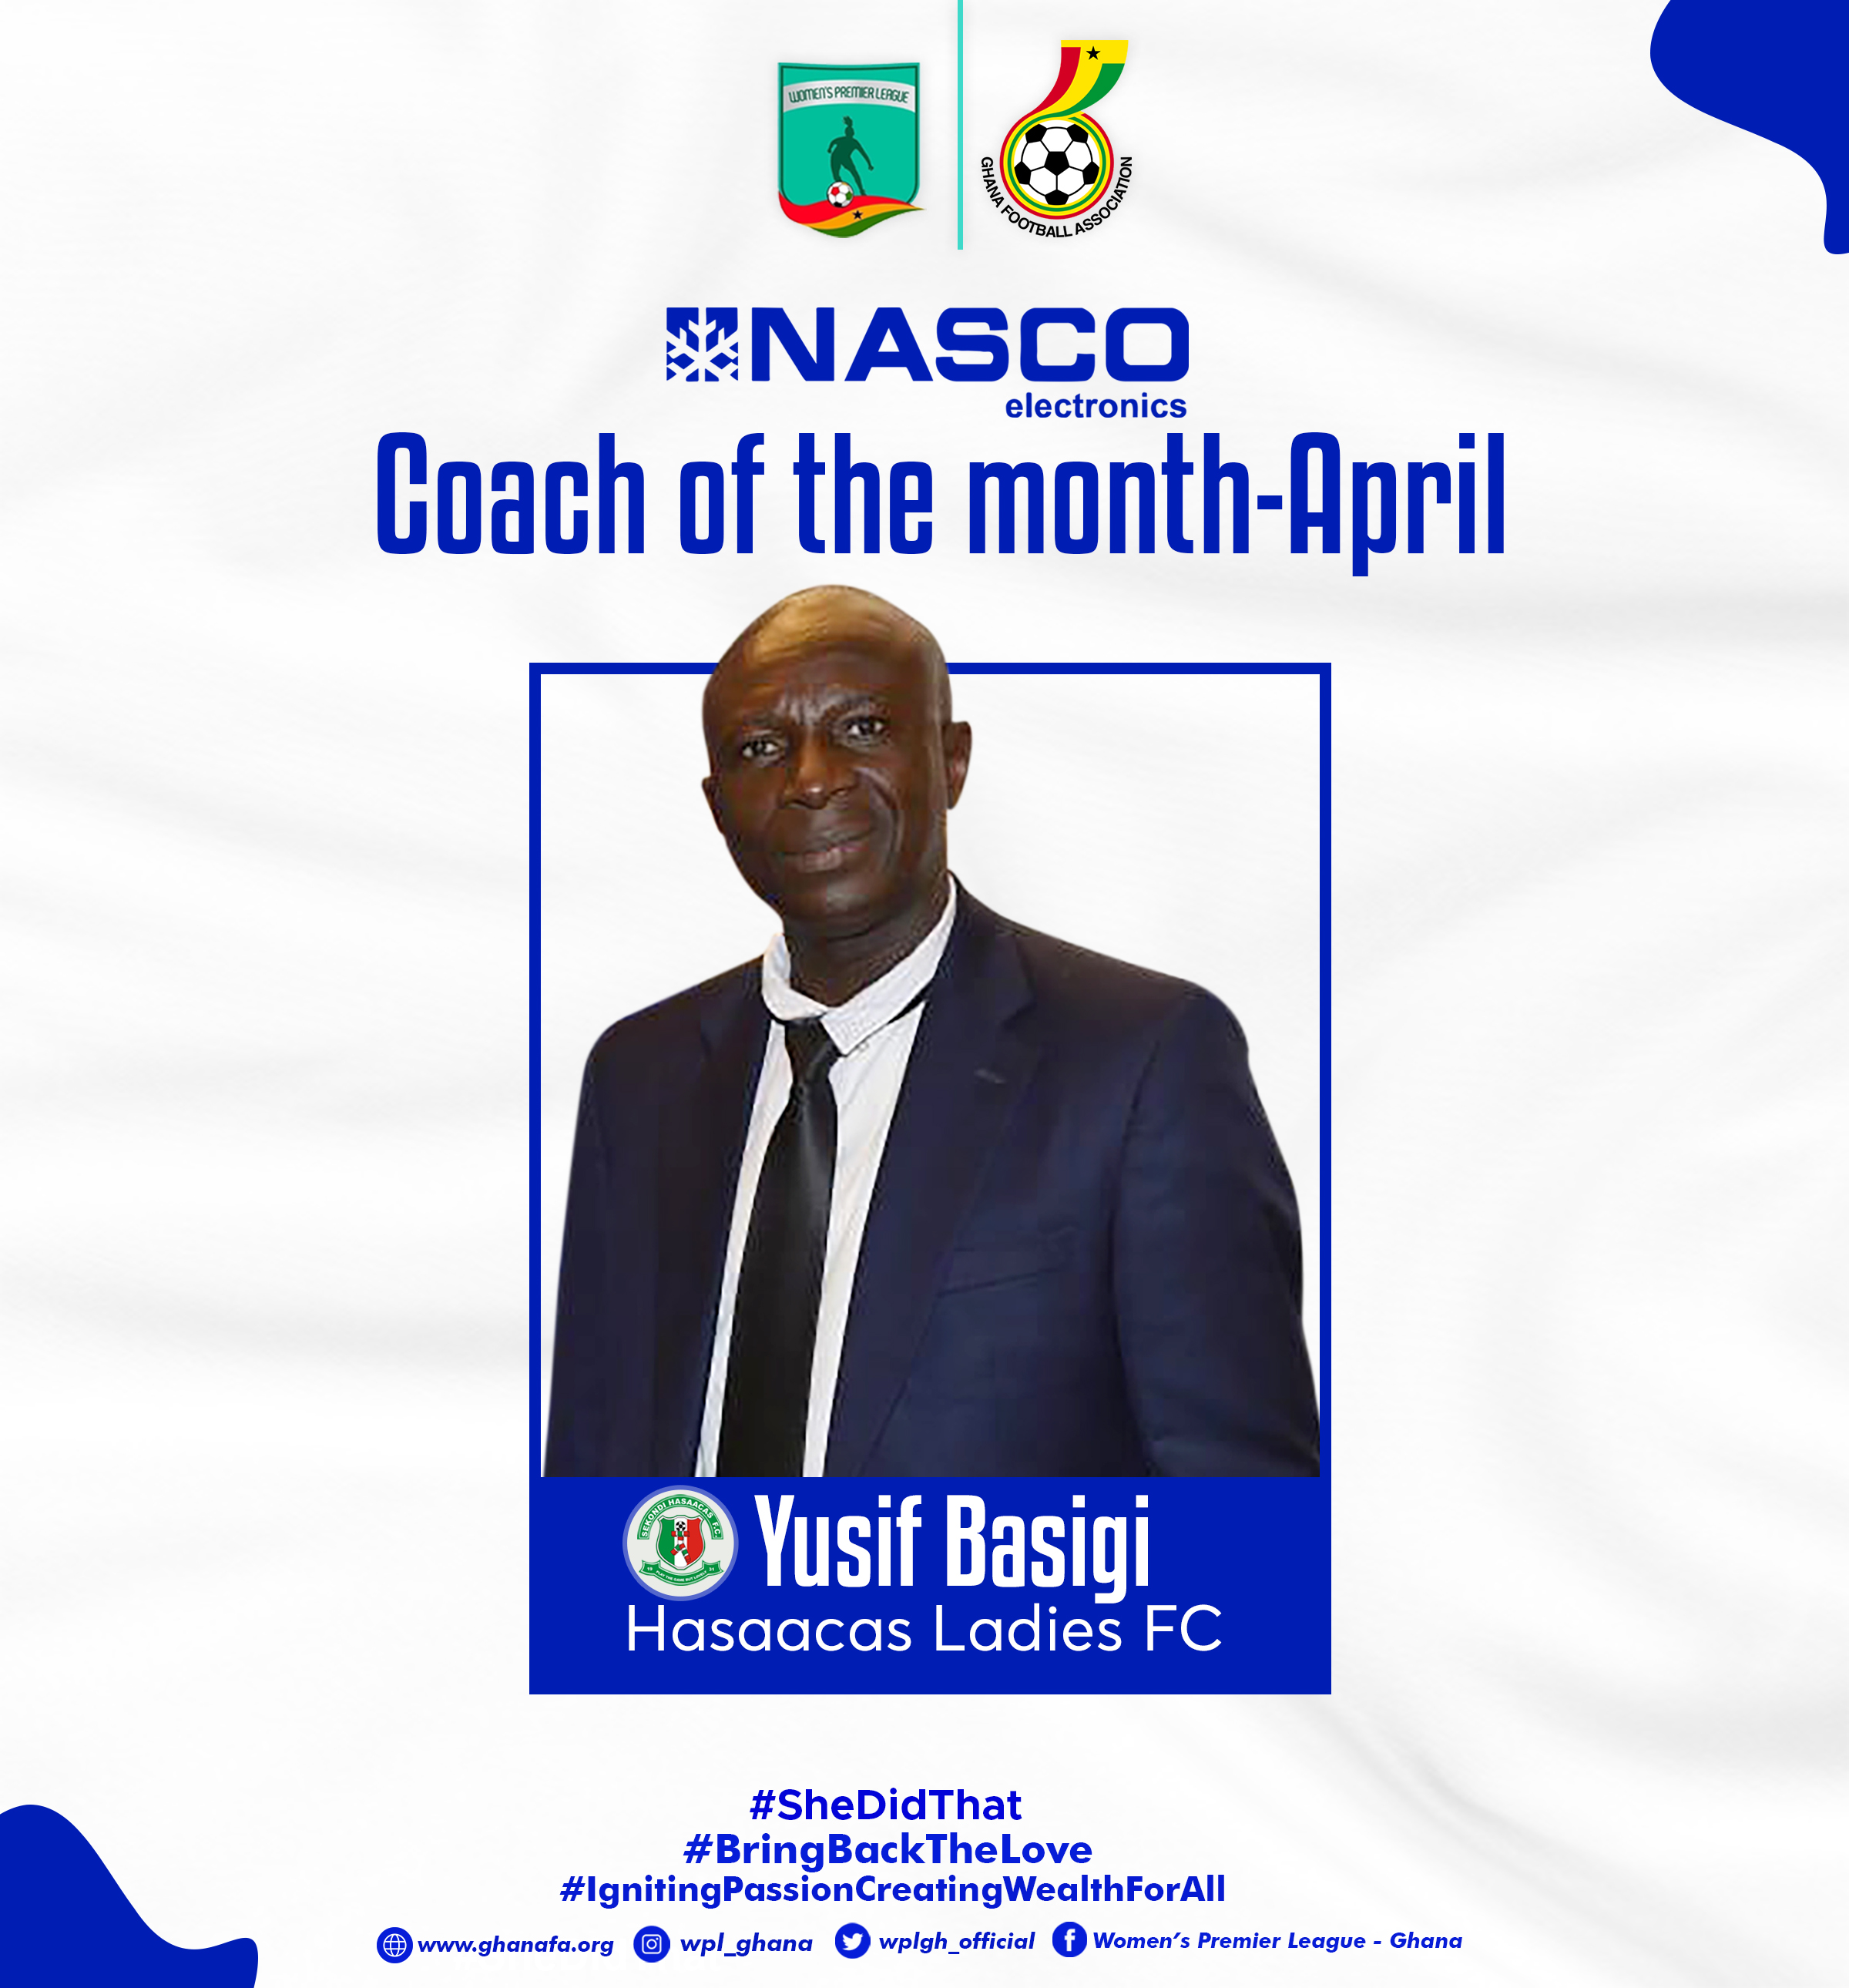 Yussif Basigi wins Nasco Coach of the month for April